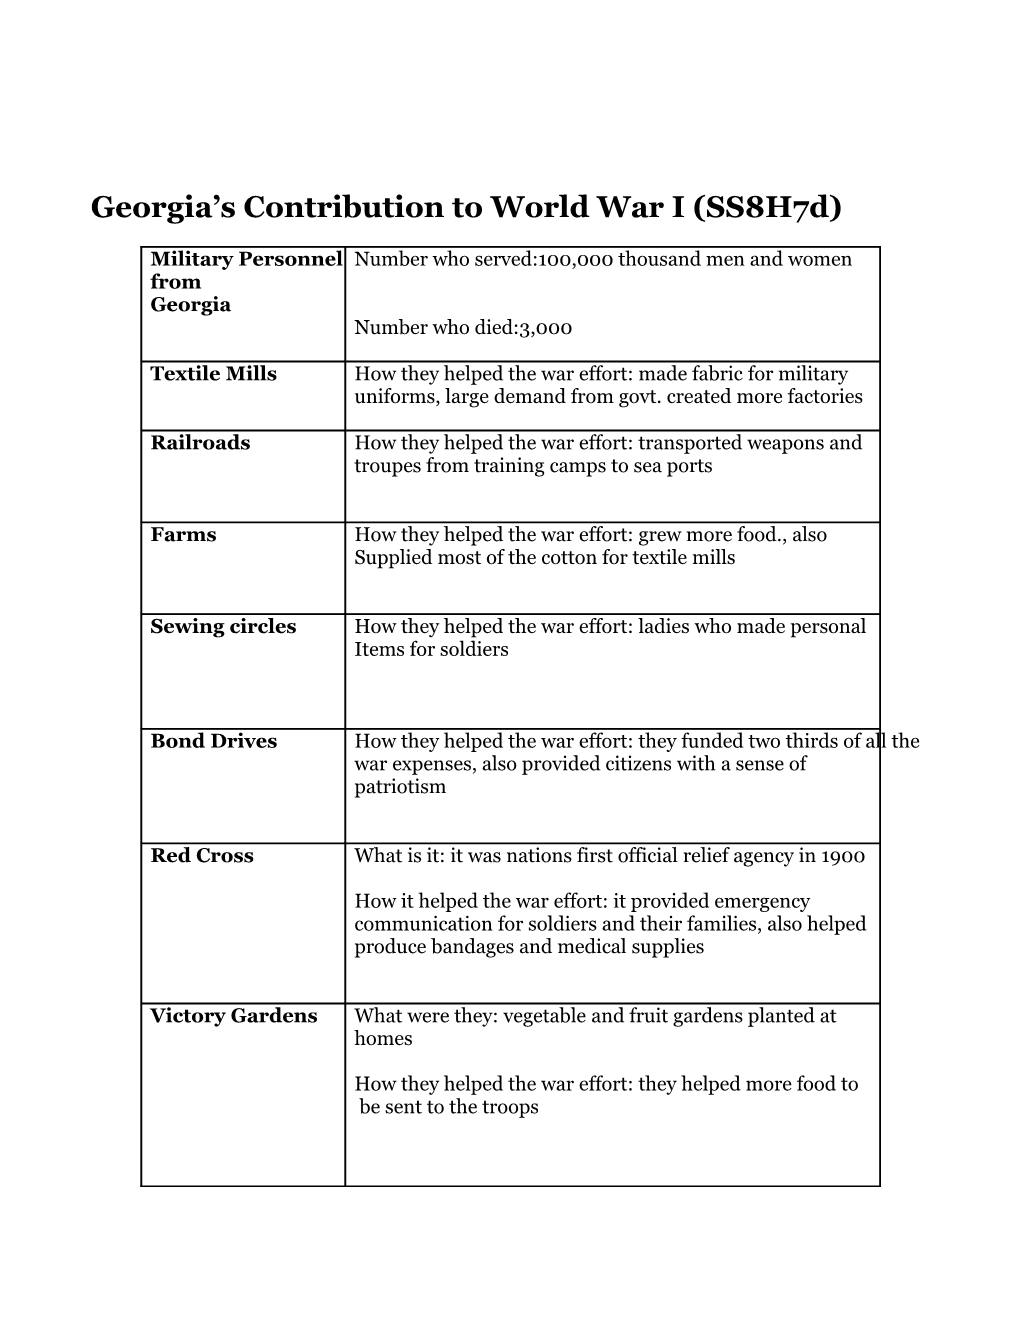 Georgia’S Contribution To World War I (Ss8h7d)